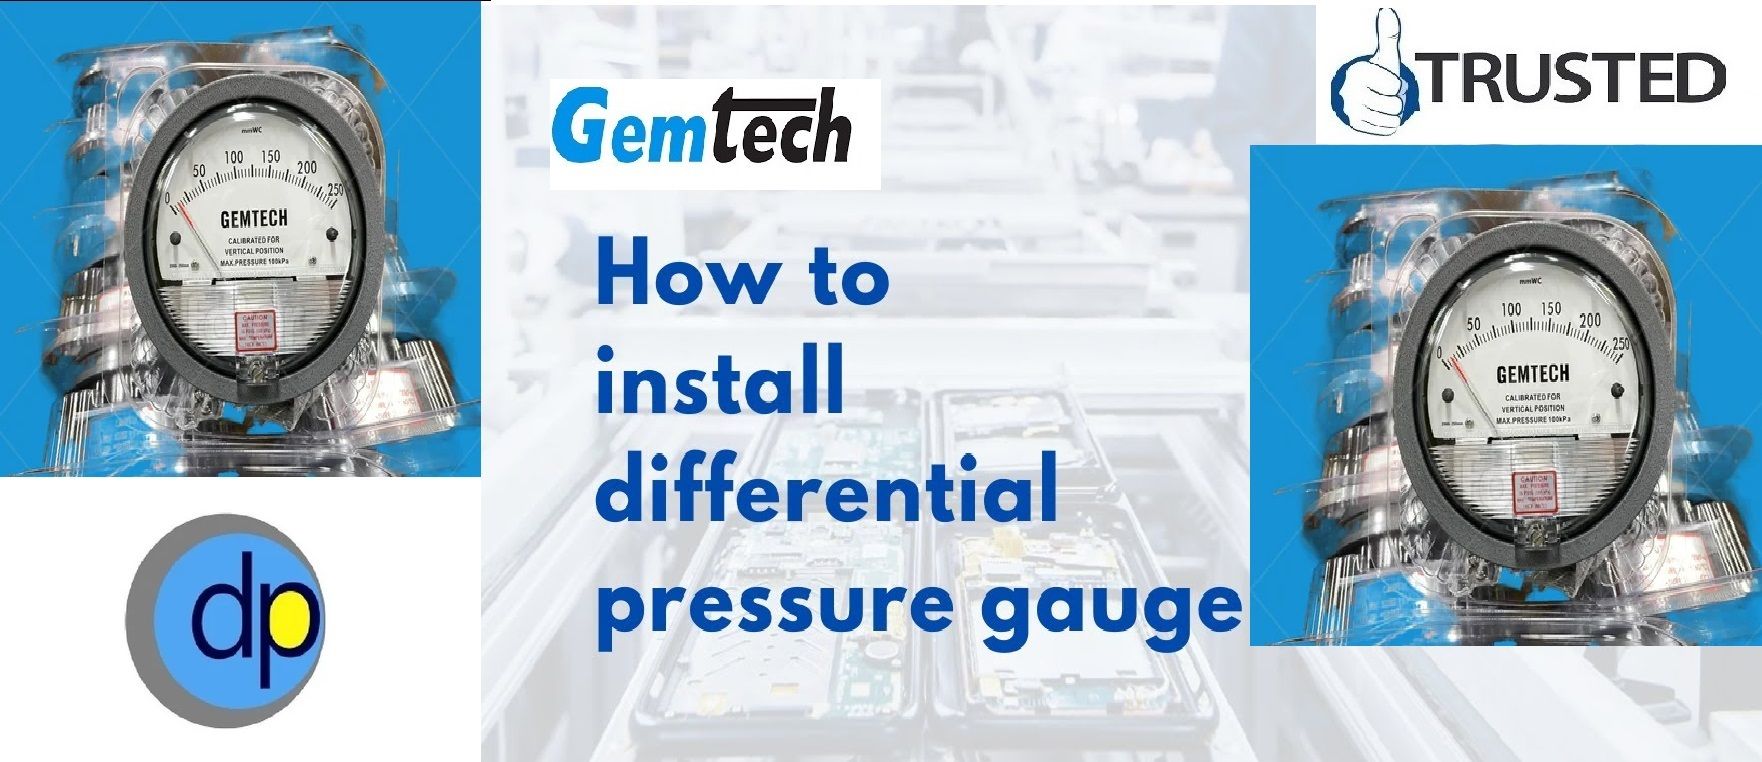 Series G2000 GEMTECH Differential Pressure Gauges from Ponda Goa